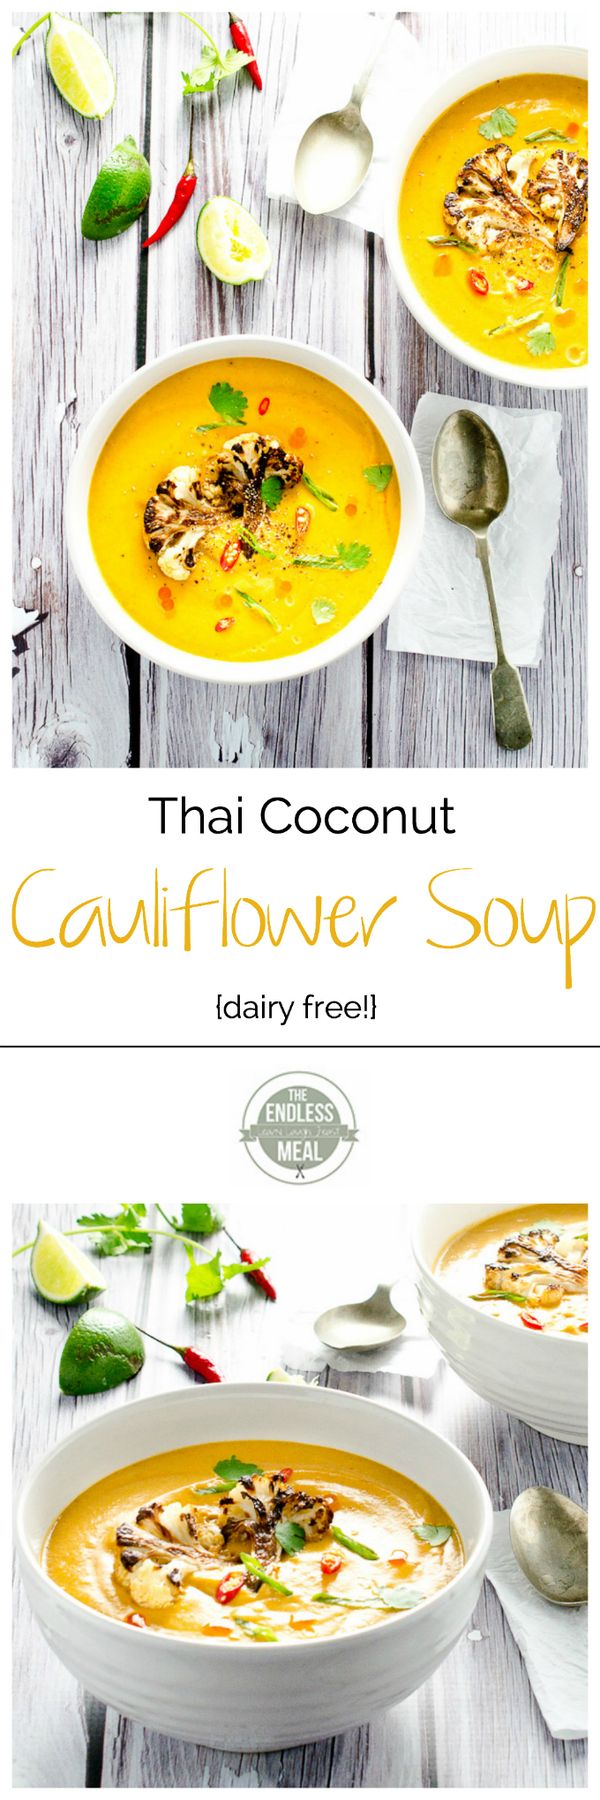 Coconut Curried Cauliflower Soup